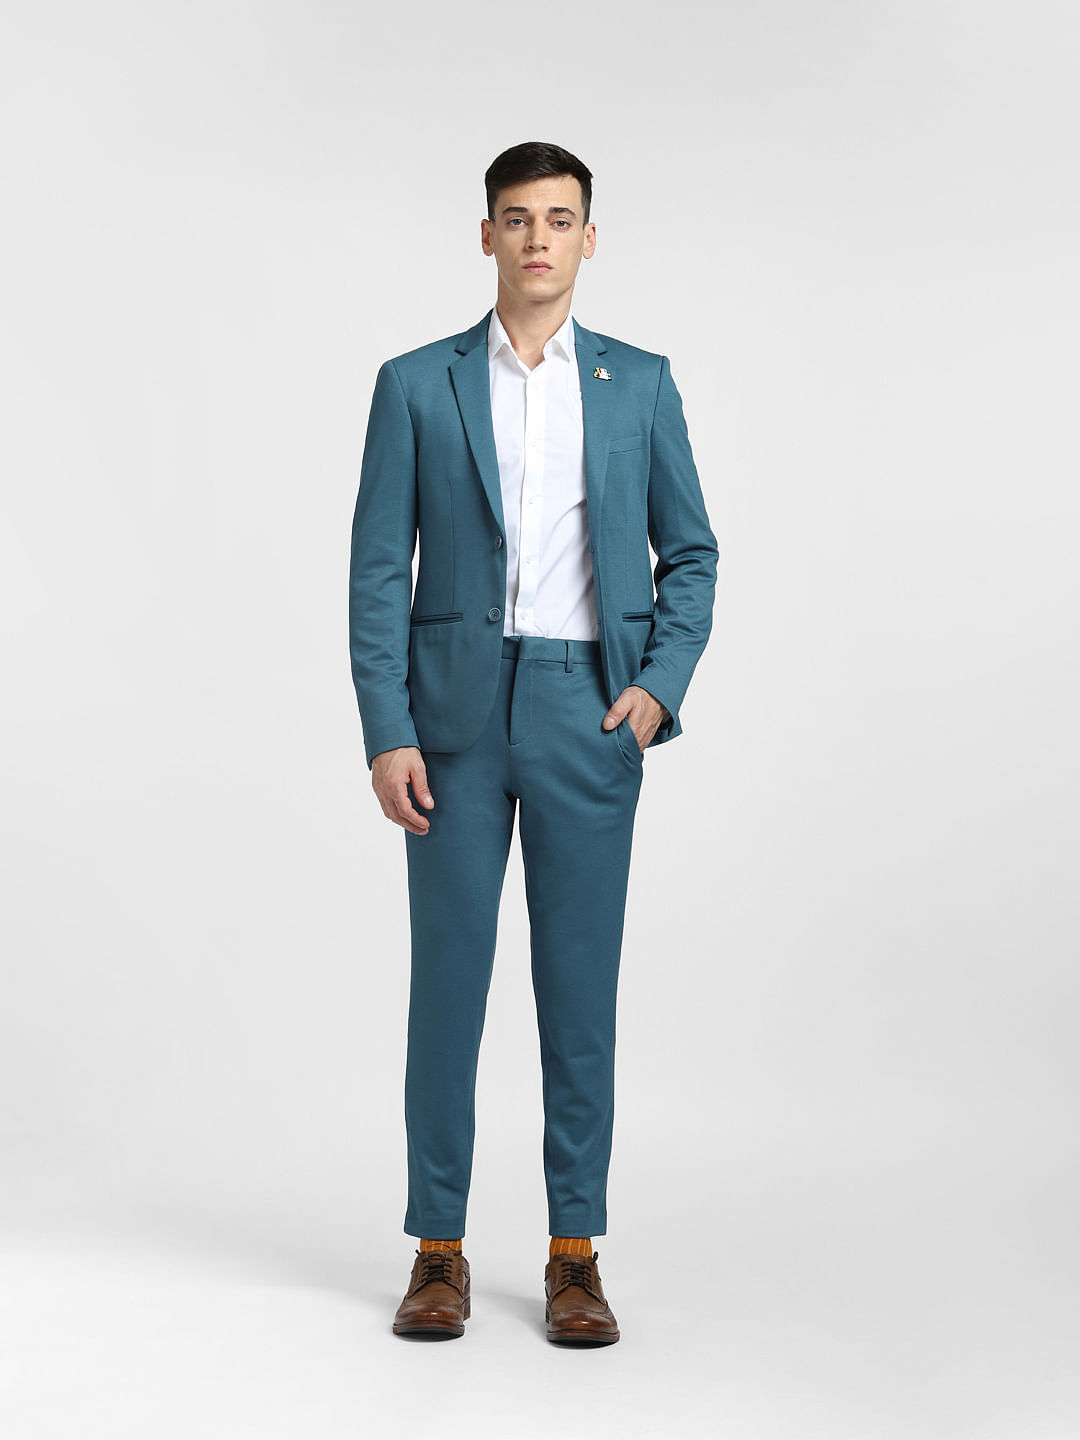 Waistcoat, blue trousers,blue blazer and tie outfit ideas for men ⋆ Best  Fashion Blog For Men - TheUnstitchd.com